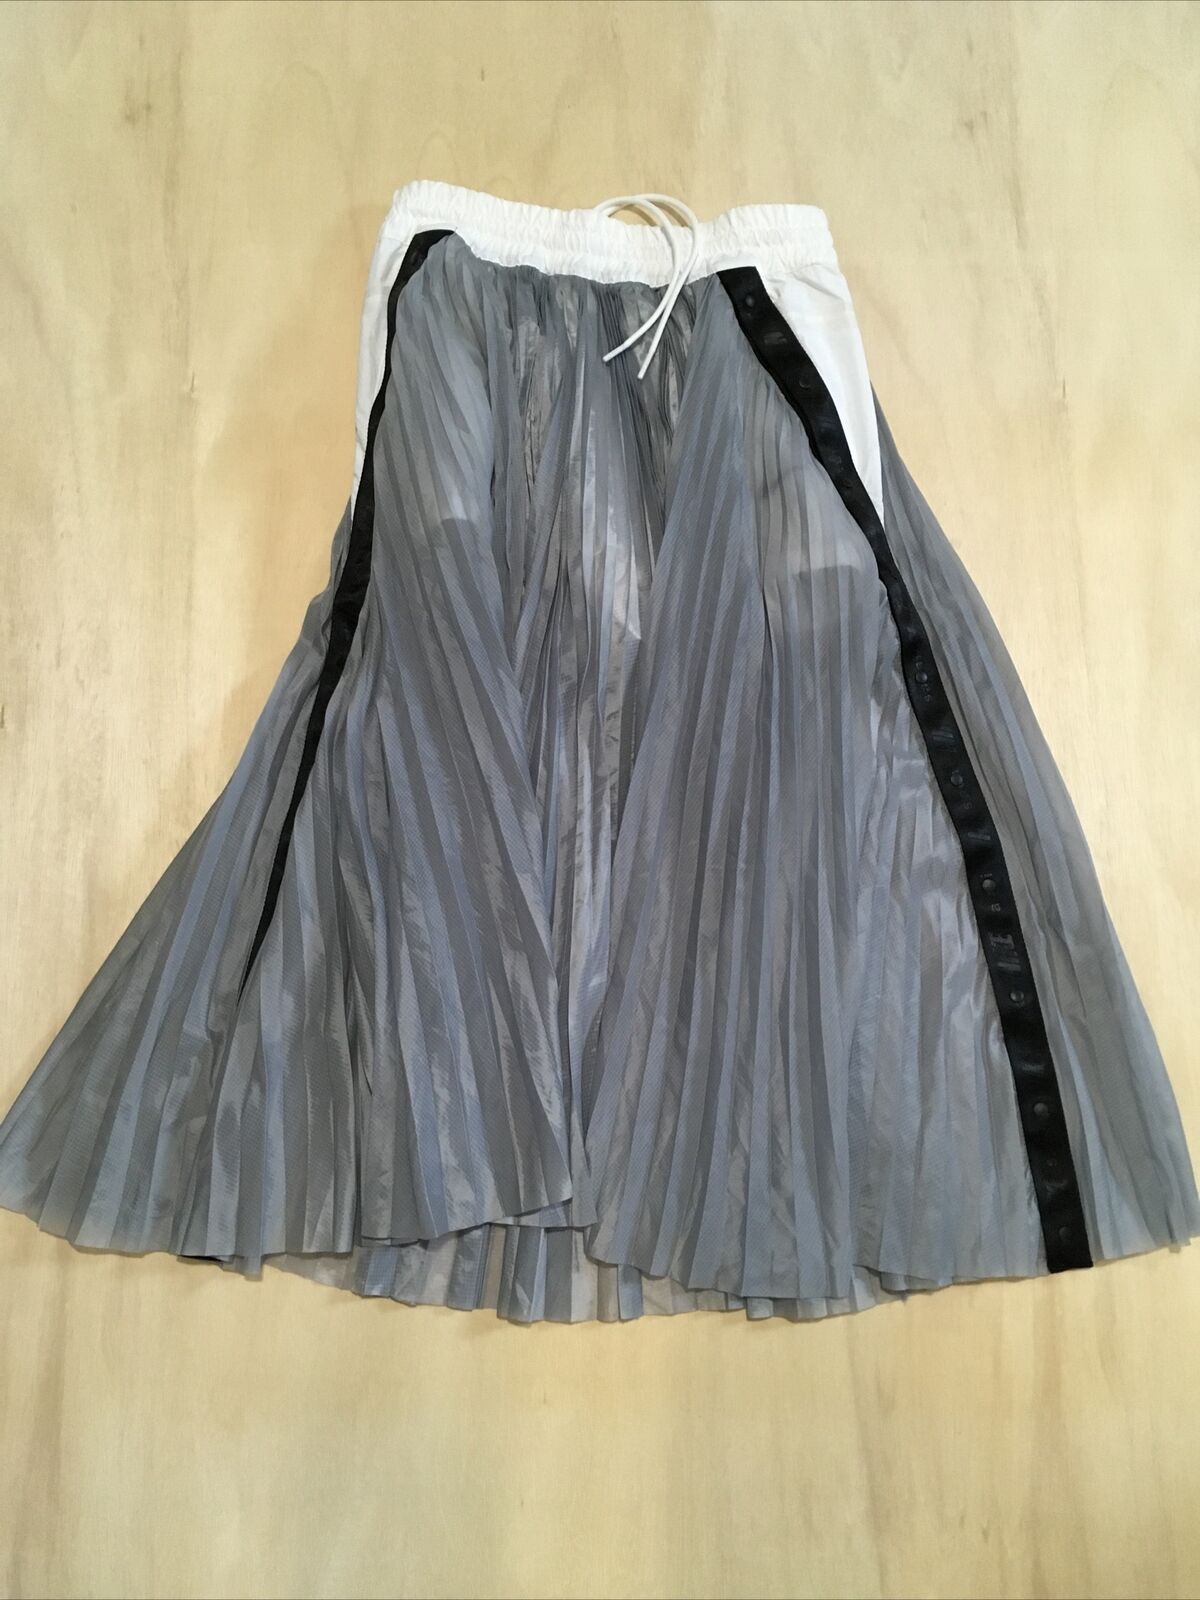 Nike x Sacai Womens Pleated Skirt CV5713-100 White Grey Size S